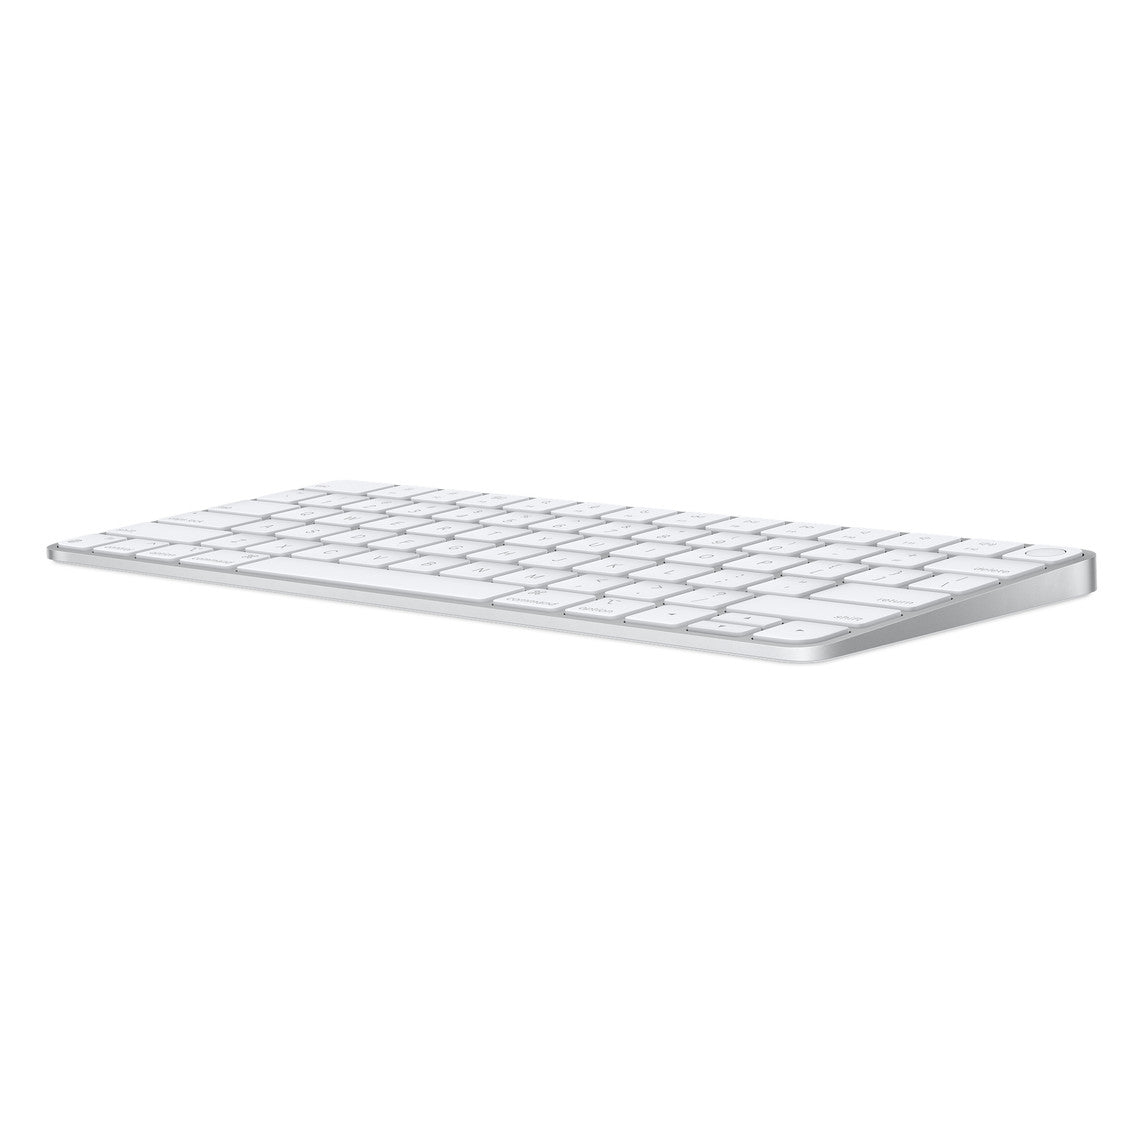 Magic Keyboard بخاصية التعرف باللمس وكيبورد رقمية من Apple (لاجهزة كمبيوتر Mac المزودة بسيليكون Apple) - عربي